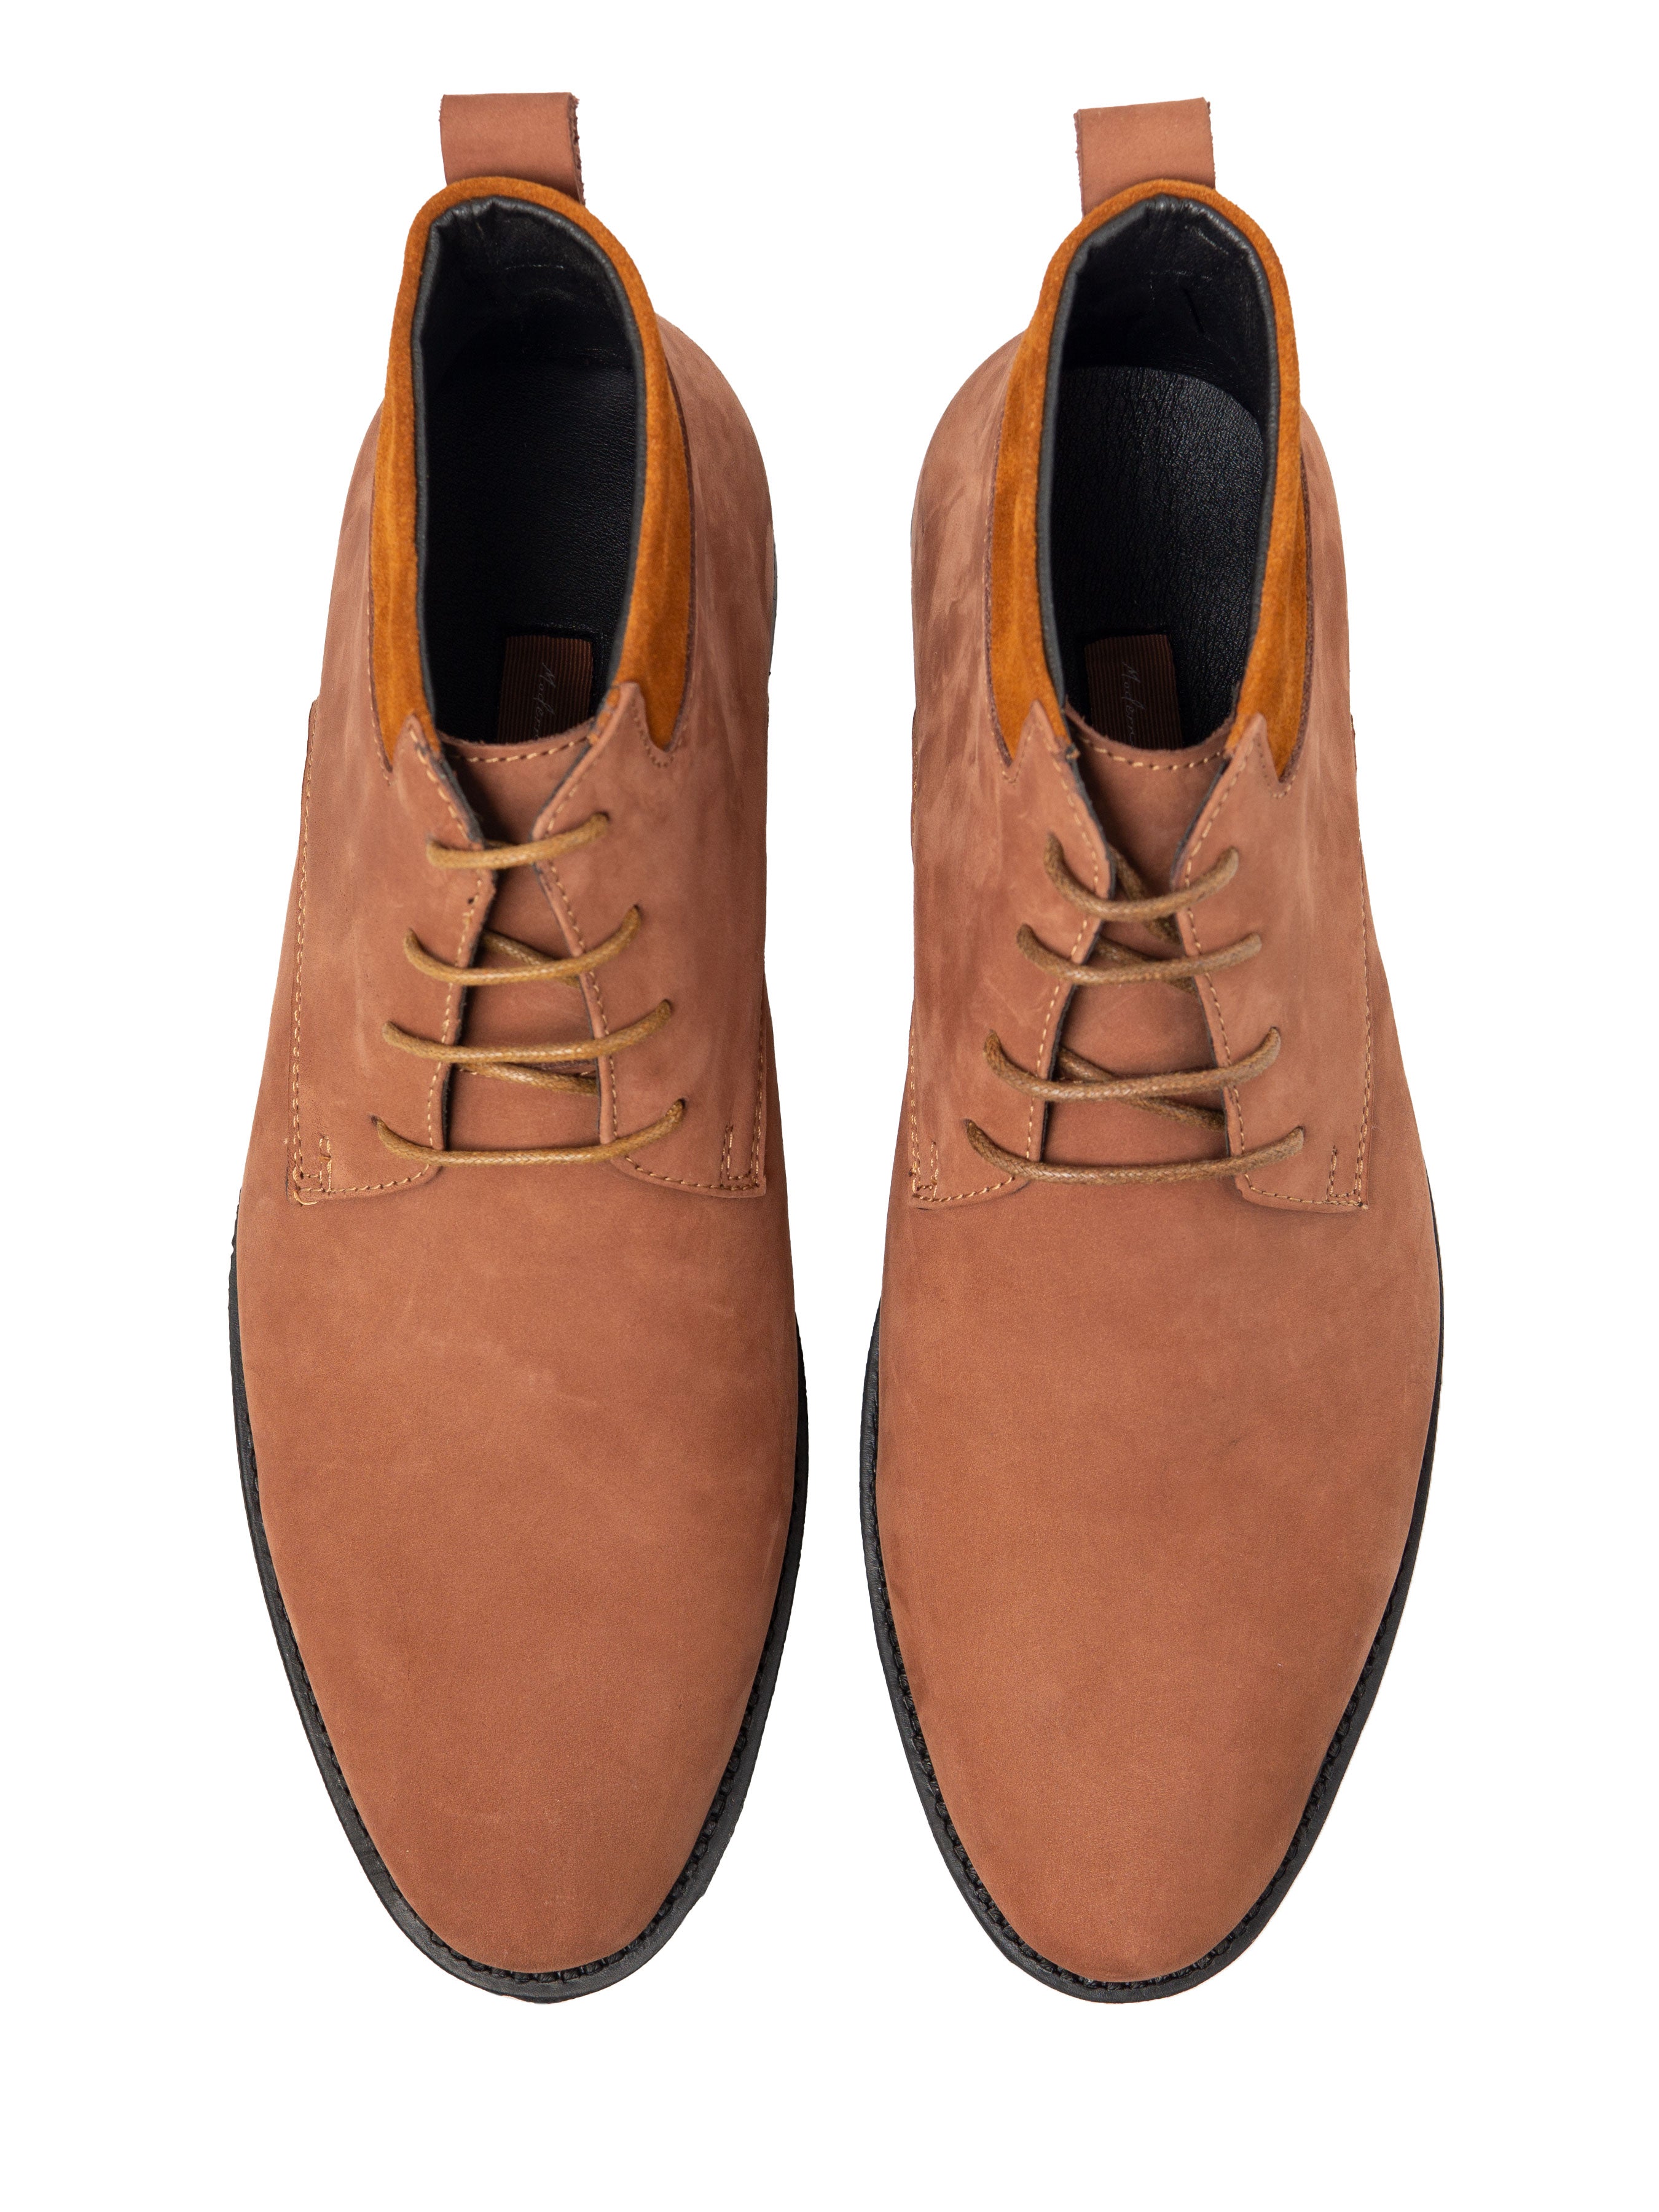 Hunter Chukka Boots - Cinnamon Brown Nubuck Leather (Crepe Sole) - Zeve Shoes